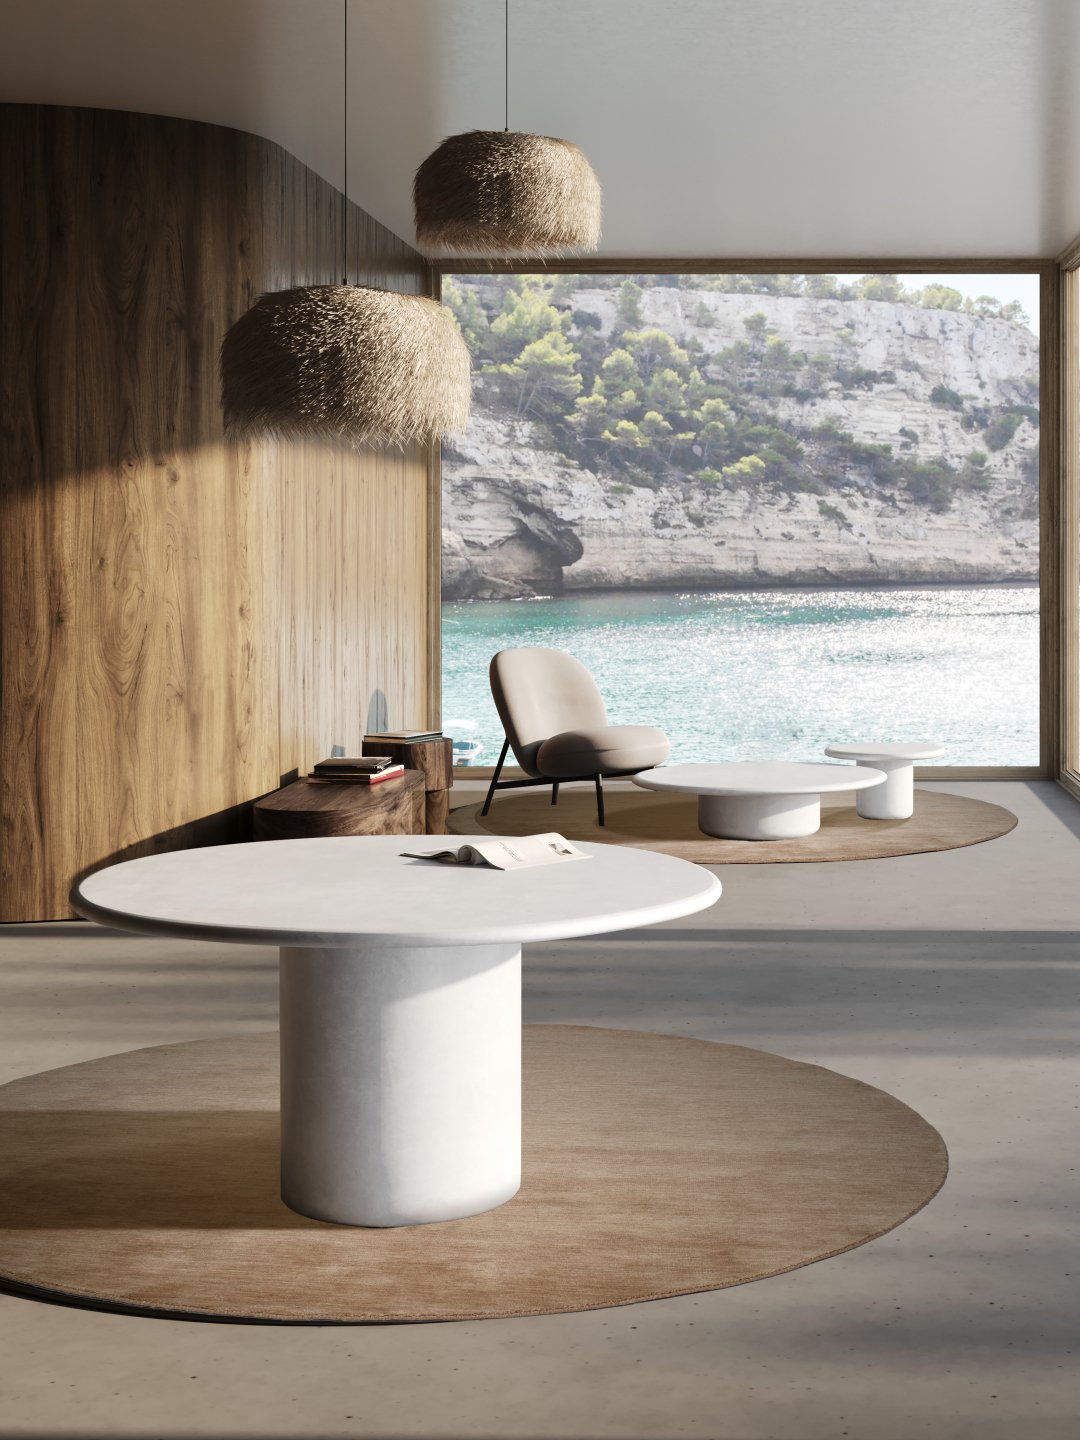 Usoo Dining Table Coffee Side Table Salt Insitu White Tallira Furniture, for indoor/outdoor use by Muundo